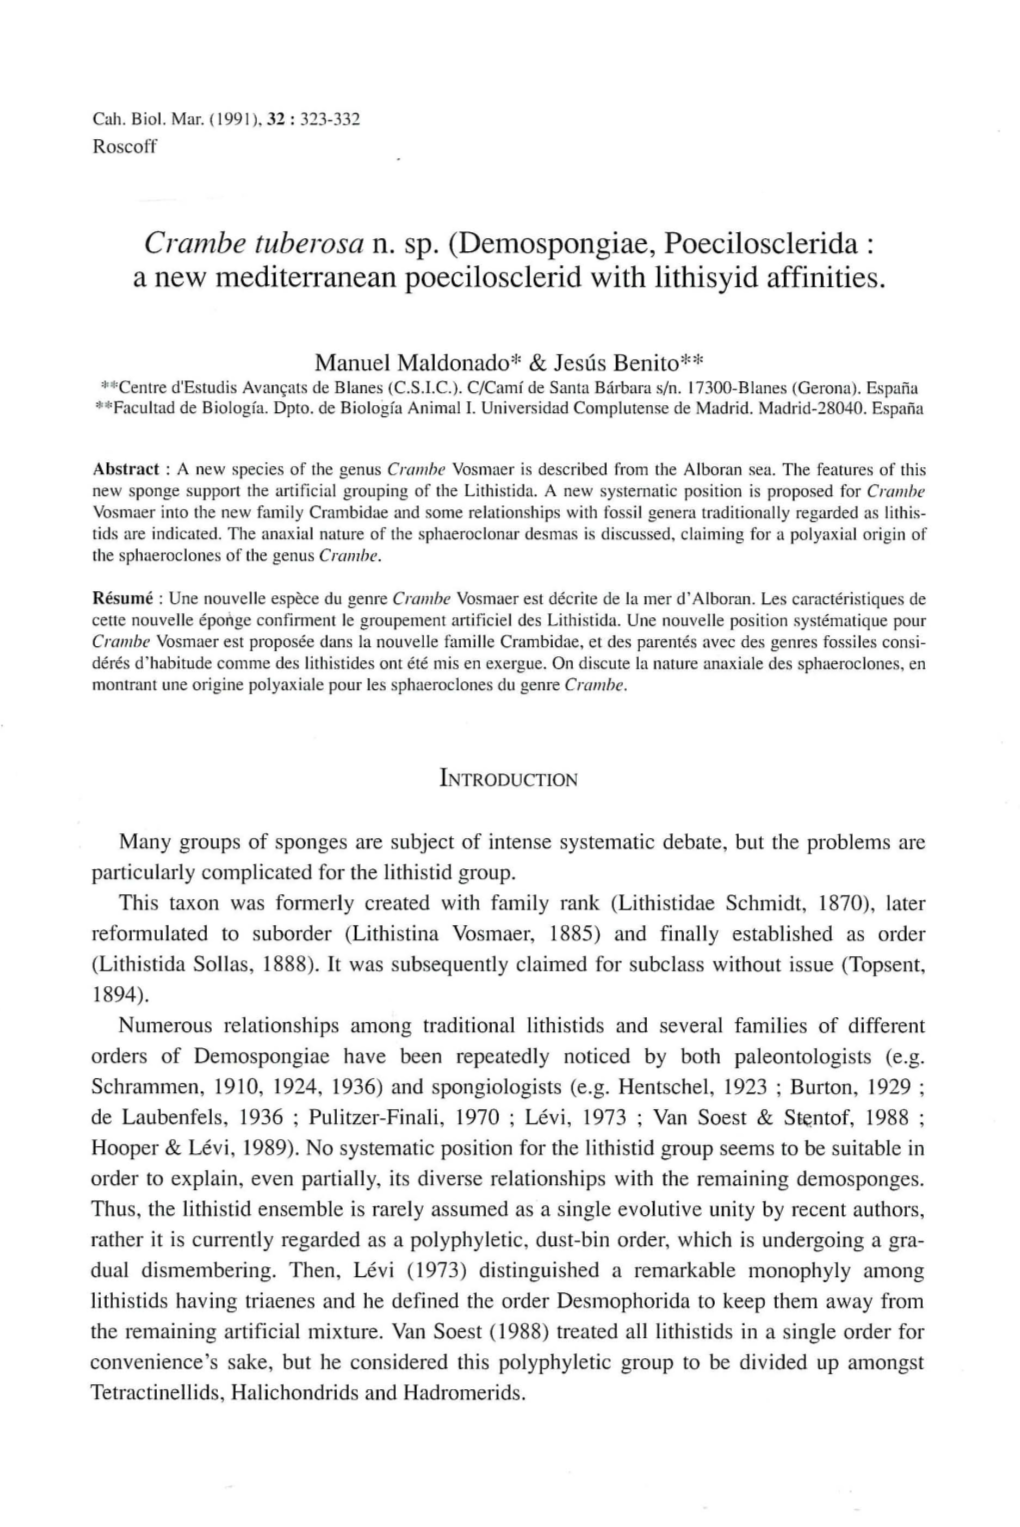 Crambe Tuberosa N. Sp. (Demospongiae, Poecilosclerida : a New Mediterranean Poecilosclerid with Lithisyid Affinities